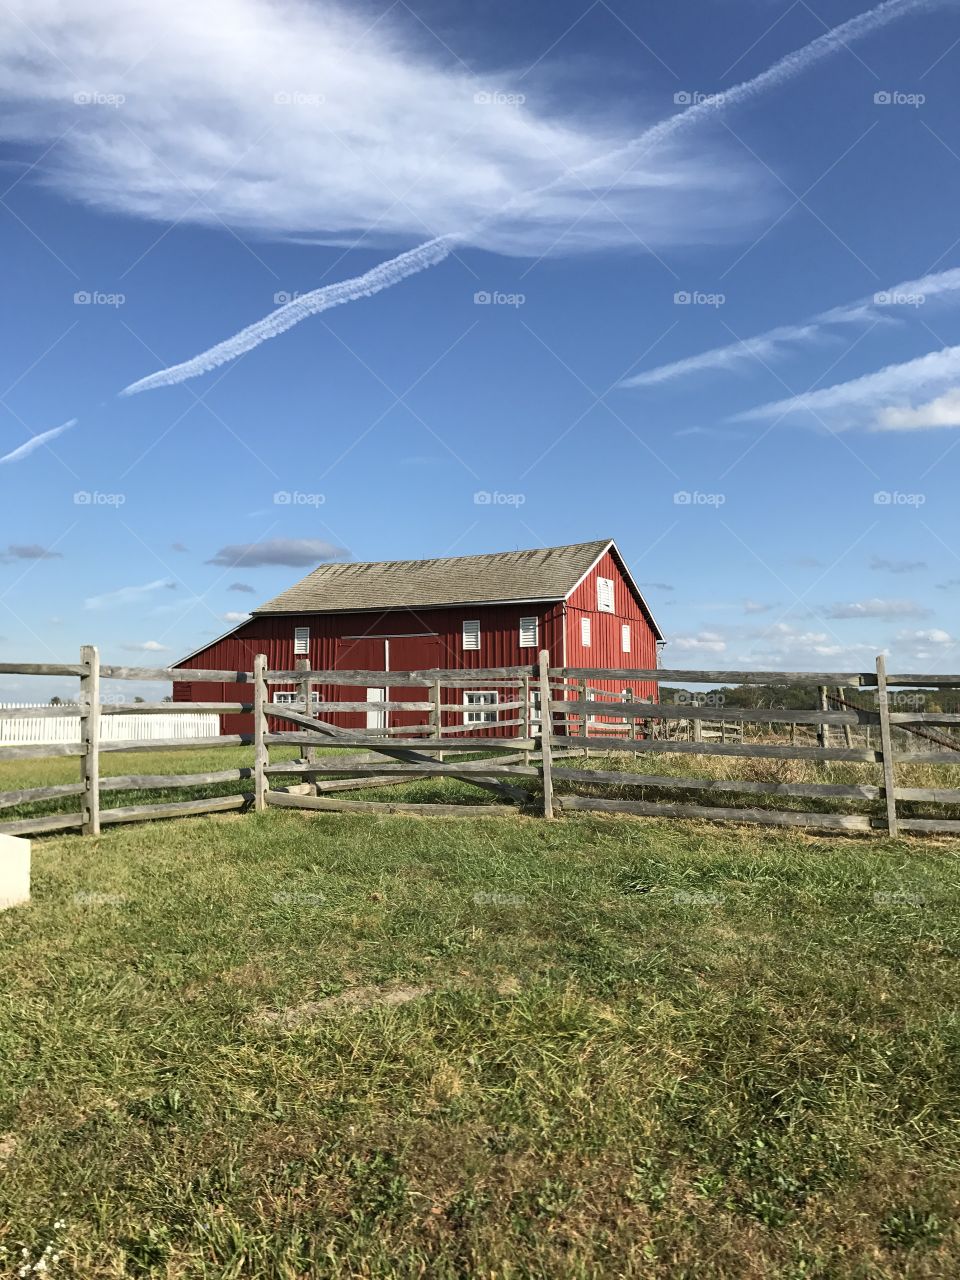 gettysburgh farm house 